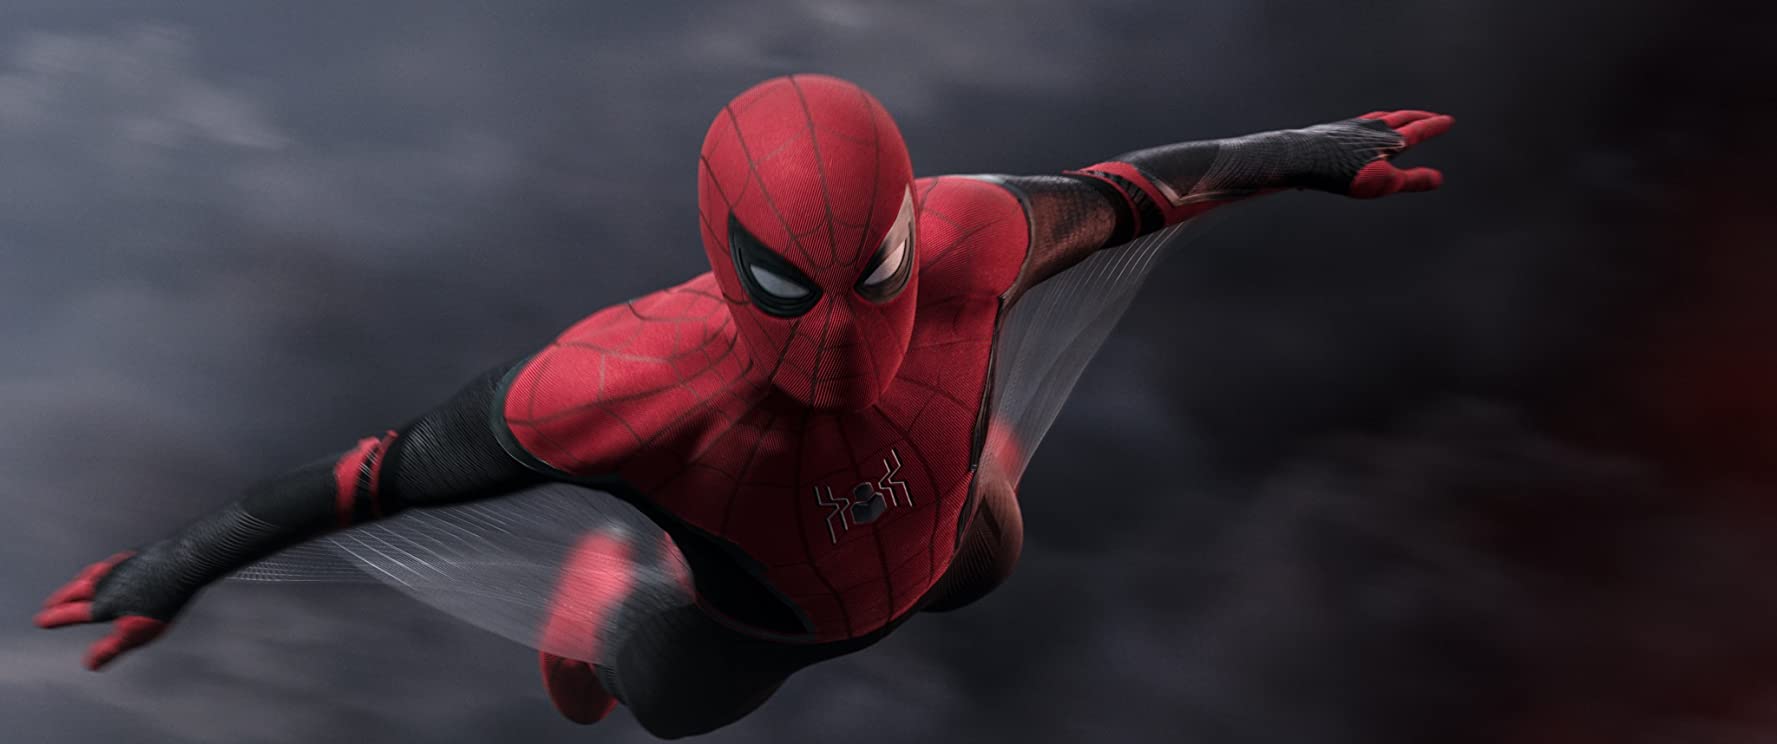 (Photo: Spider Man.Credit: IMDb)